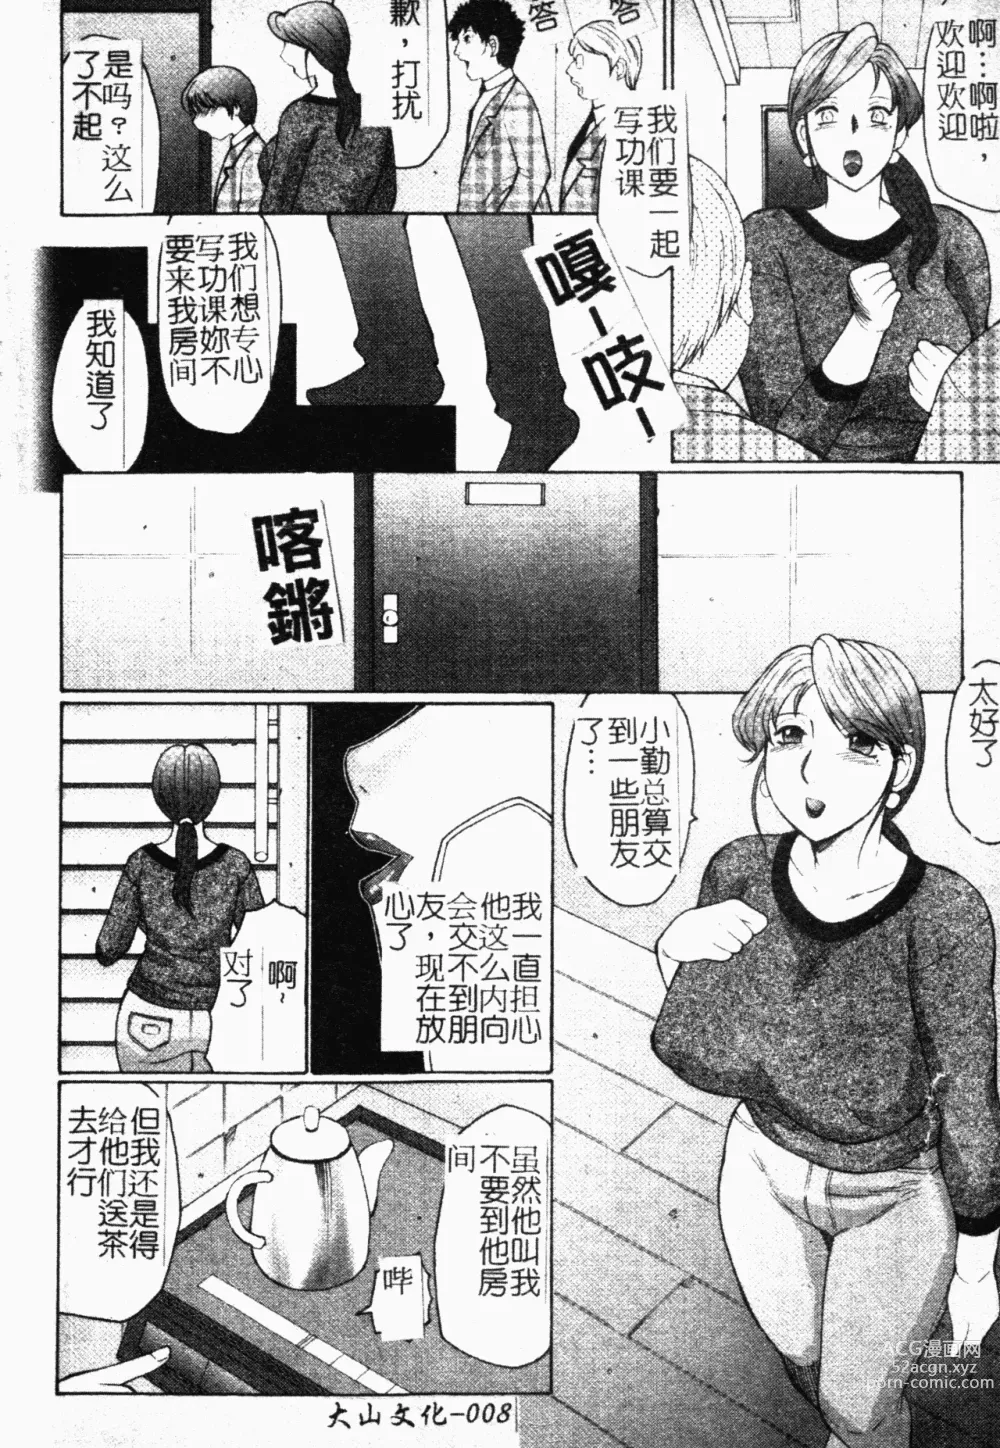 Page 8 of manga Haha Mamire